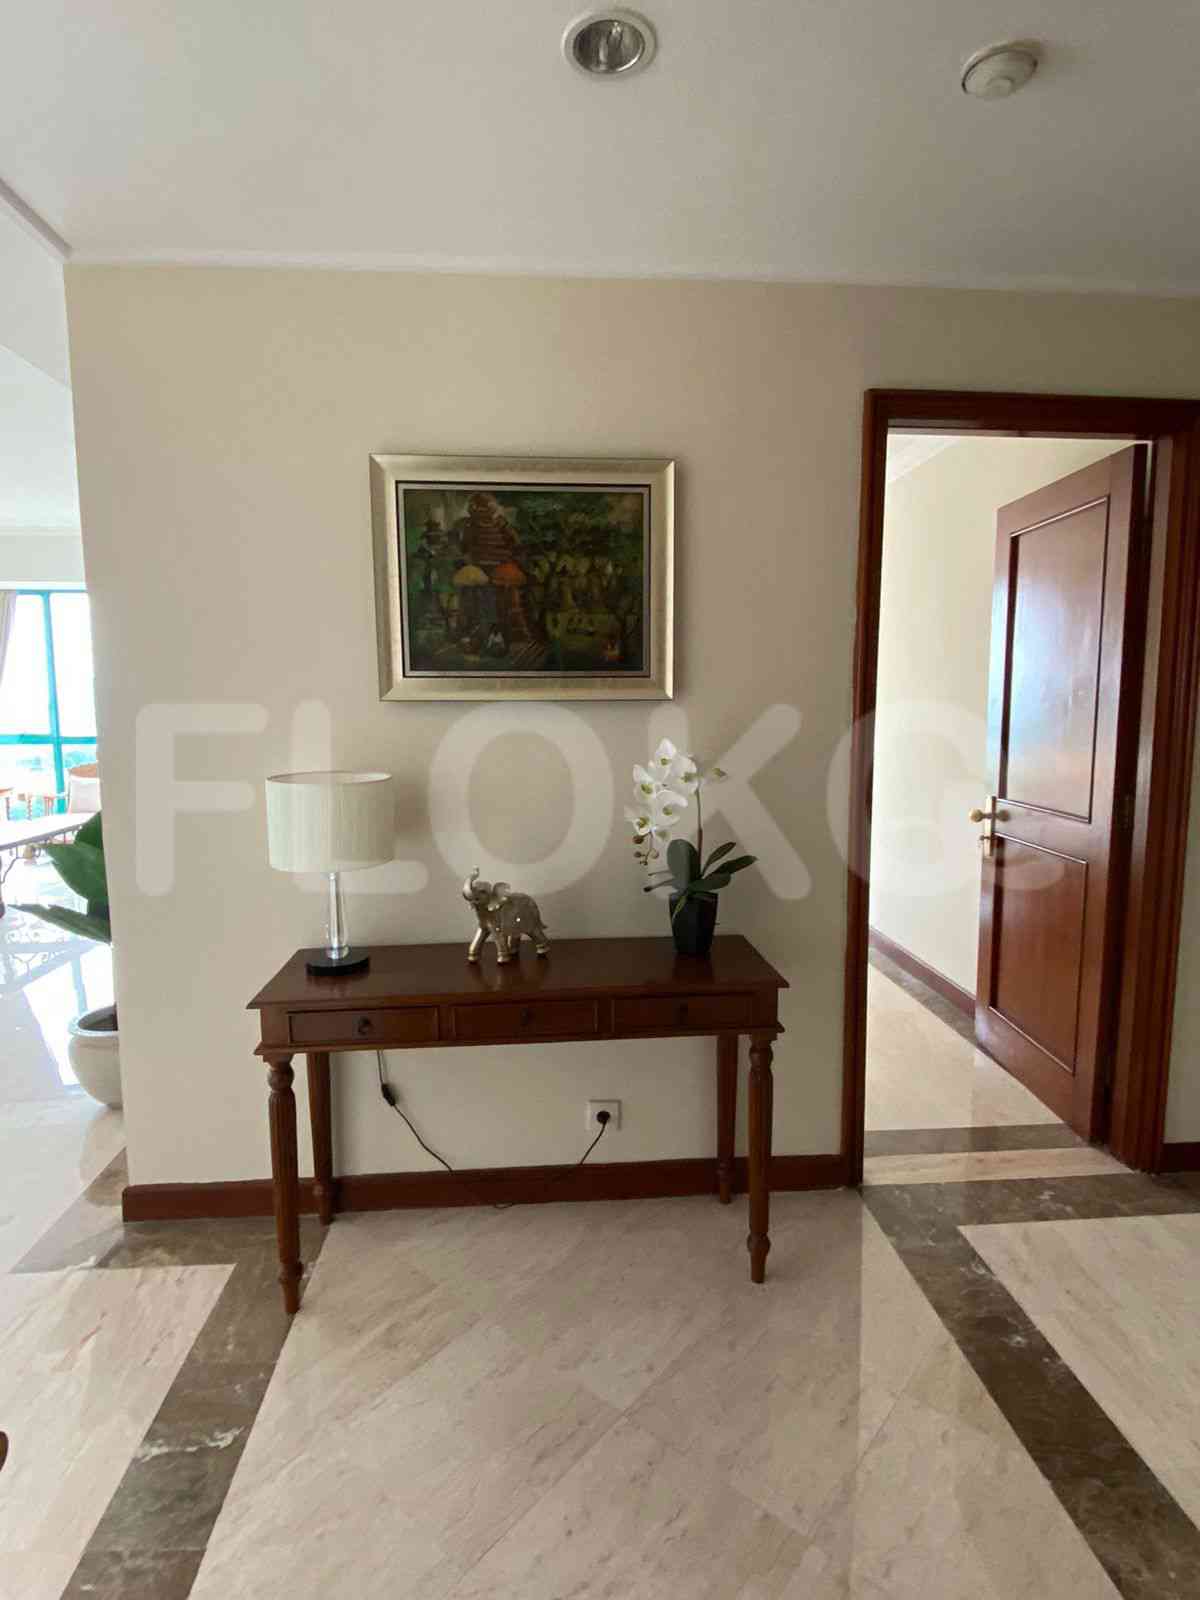 3 Bedroom on 10th Floor for Rent in Casablanca Apartment - fte130 5